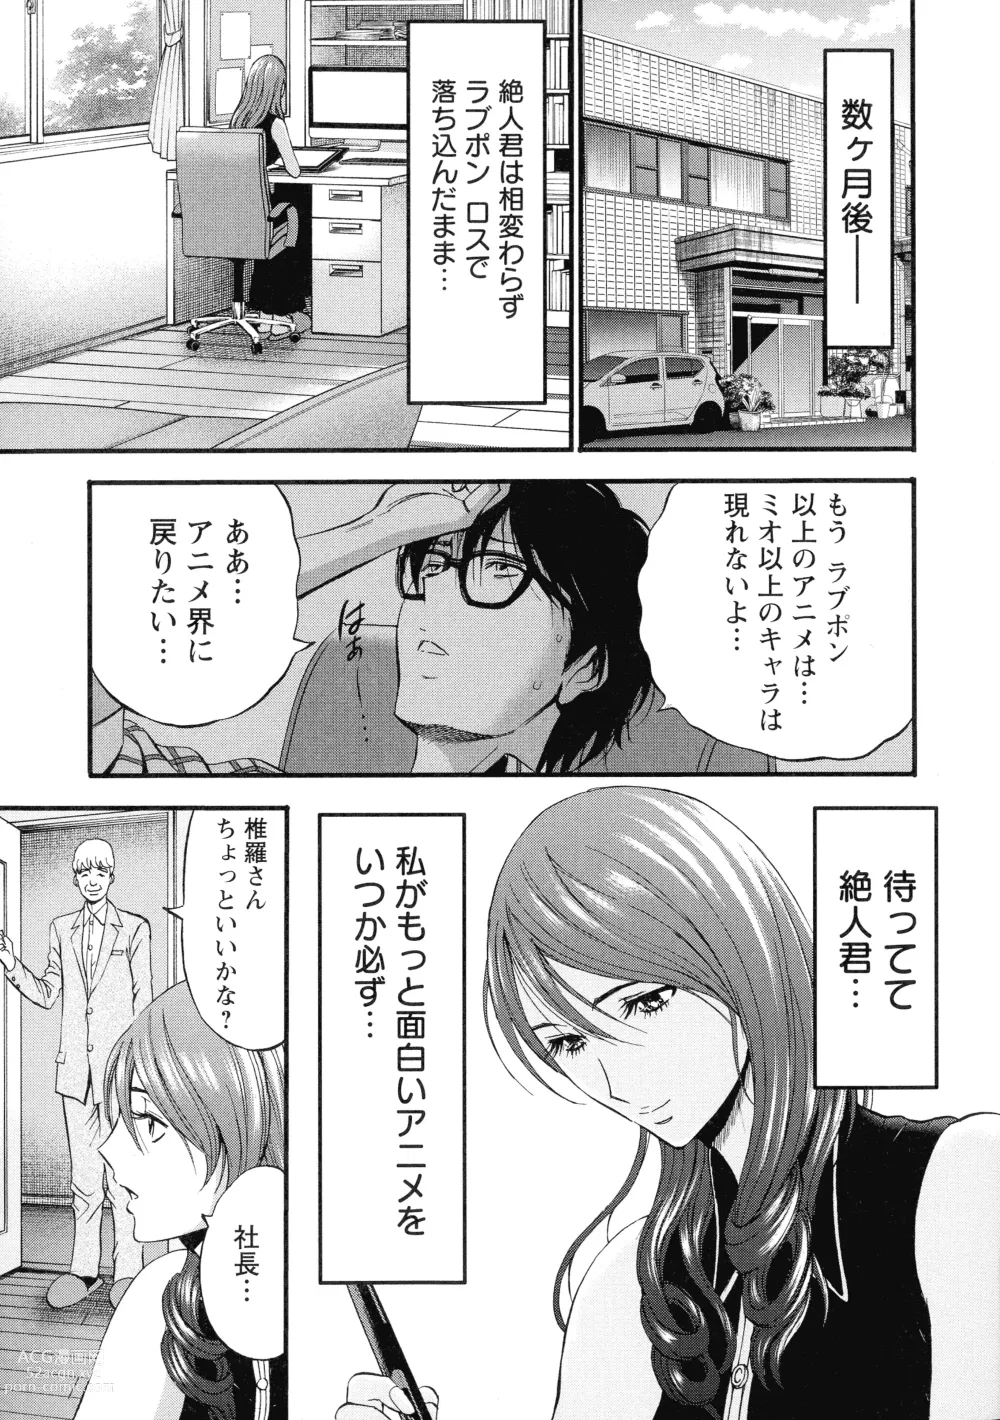 Page 180 of manga Watashi o Ikasete Haramasete... ~Anime Diver Z~ 2